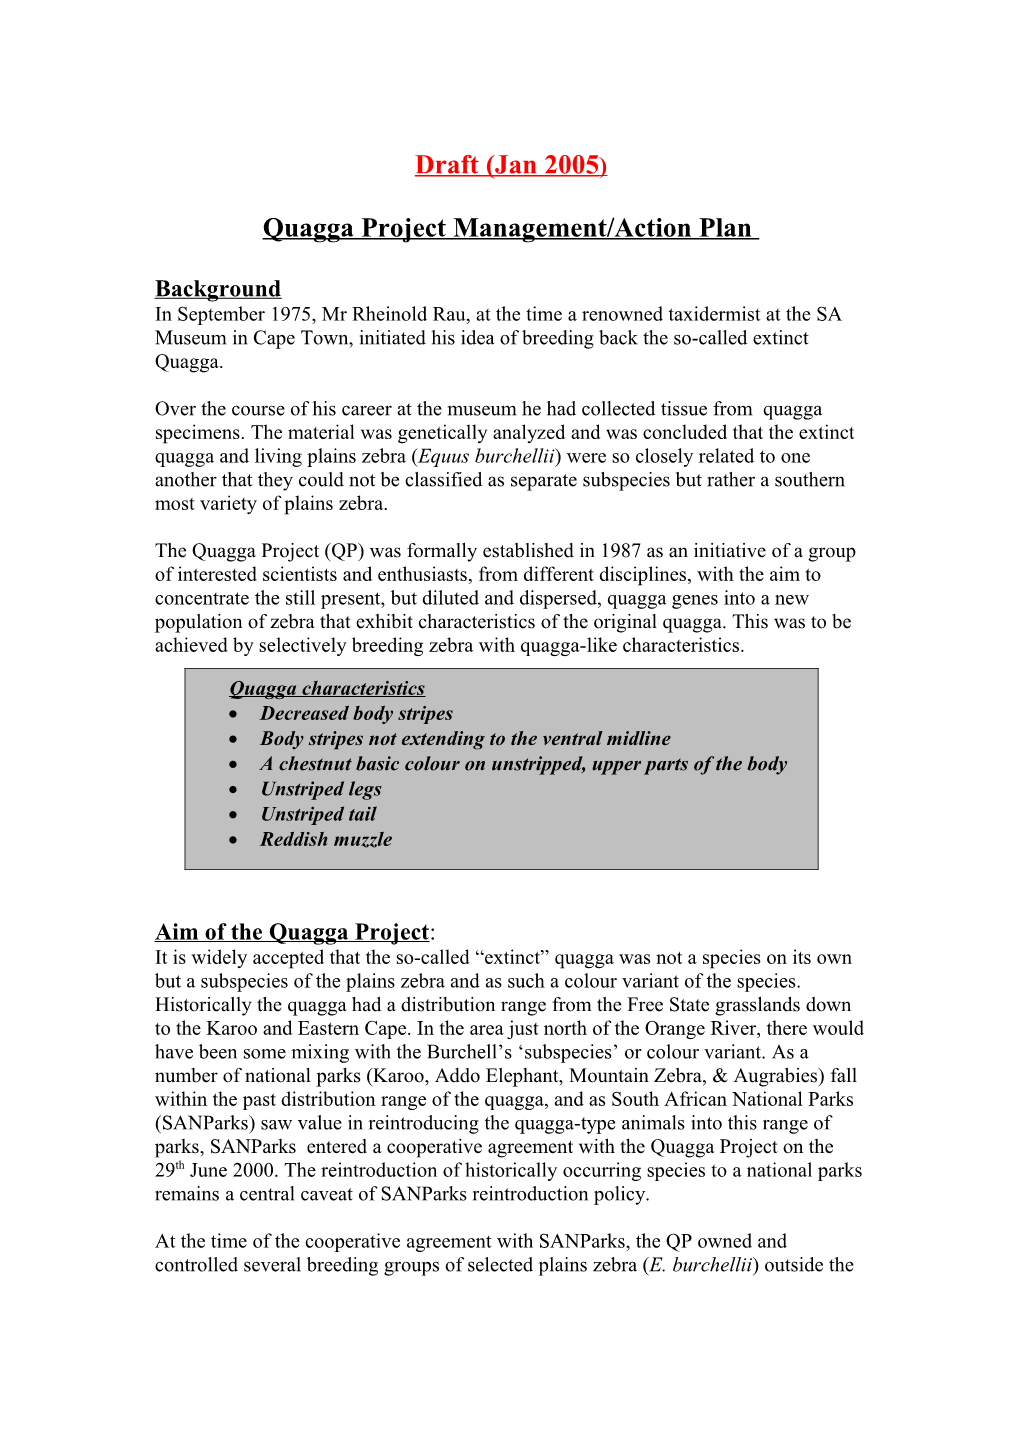 Quagga Project Management Plan